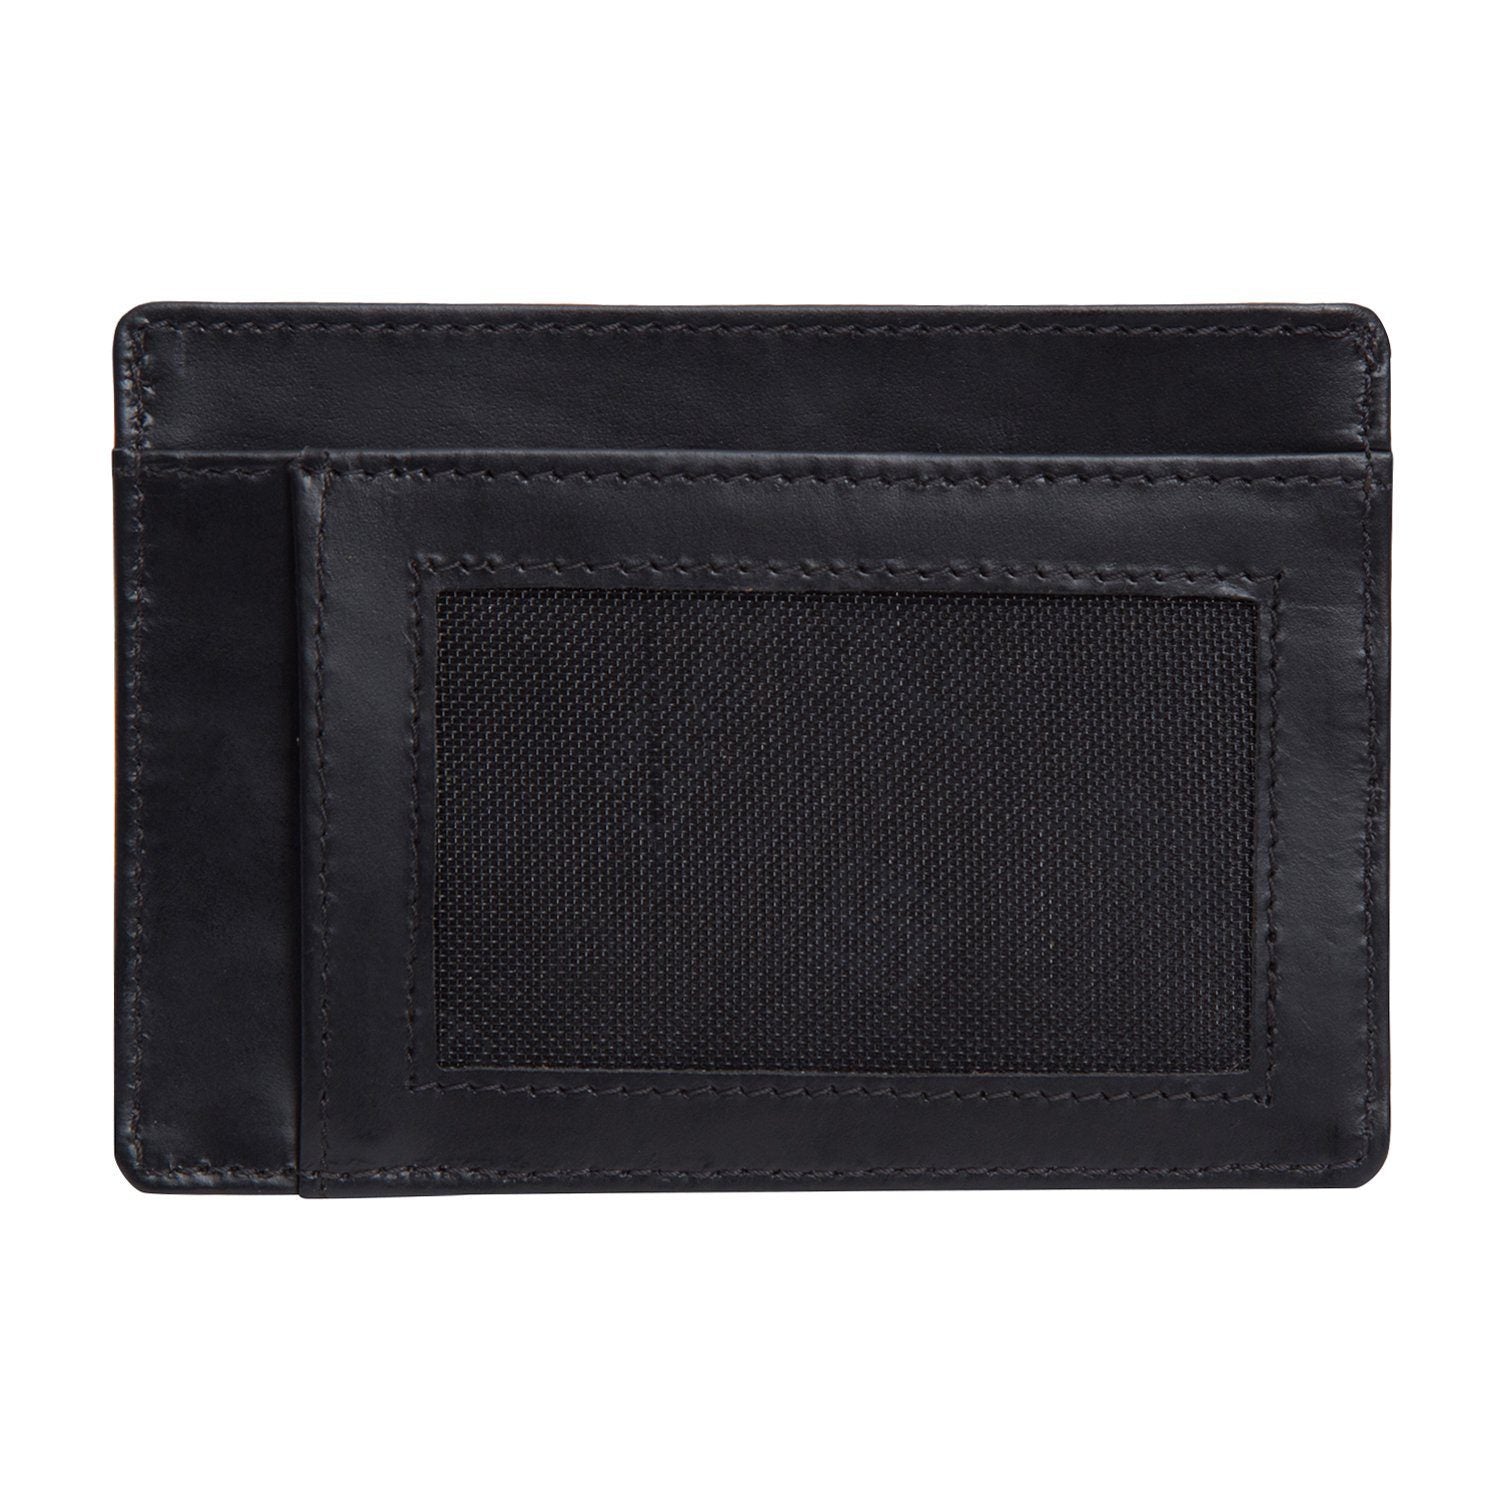 Black Colour Italian Leather Card Holder/Slim Wallet (5 Card Slot + 1 ID Slot + Cash Compartment) Cathy London 